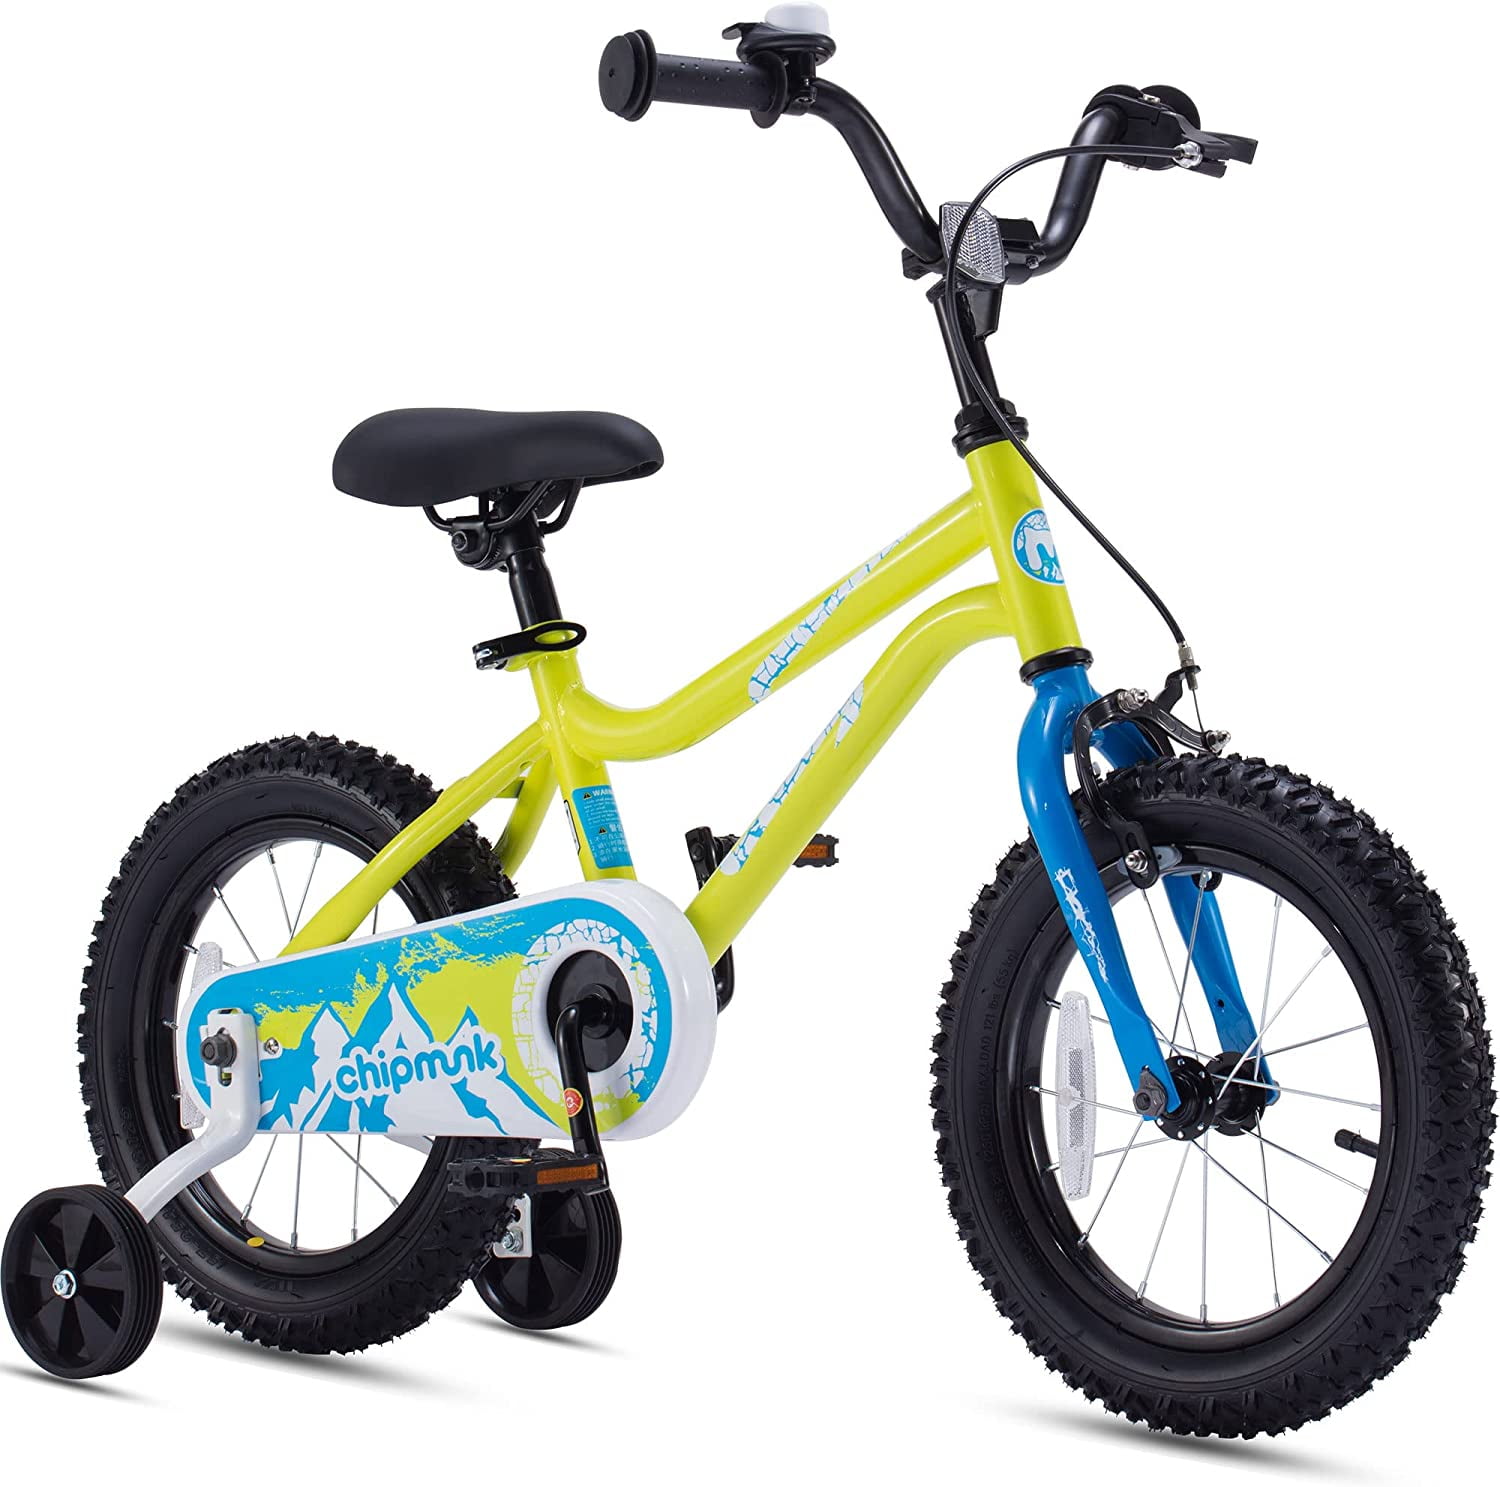 ZOSEN Bicycle Training Wheels Heavy Duty Bike Stabilizers for 12 14 16 18 20 Inch Kids Bikes 